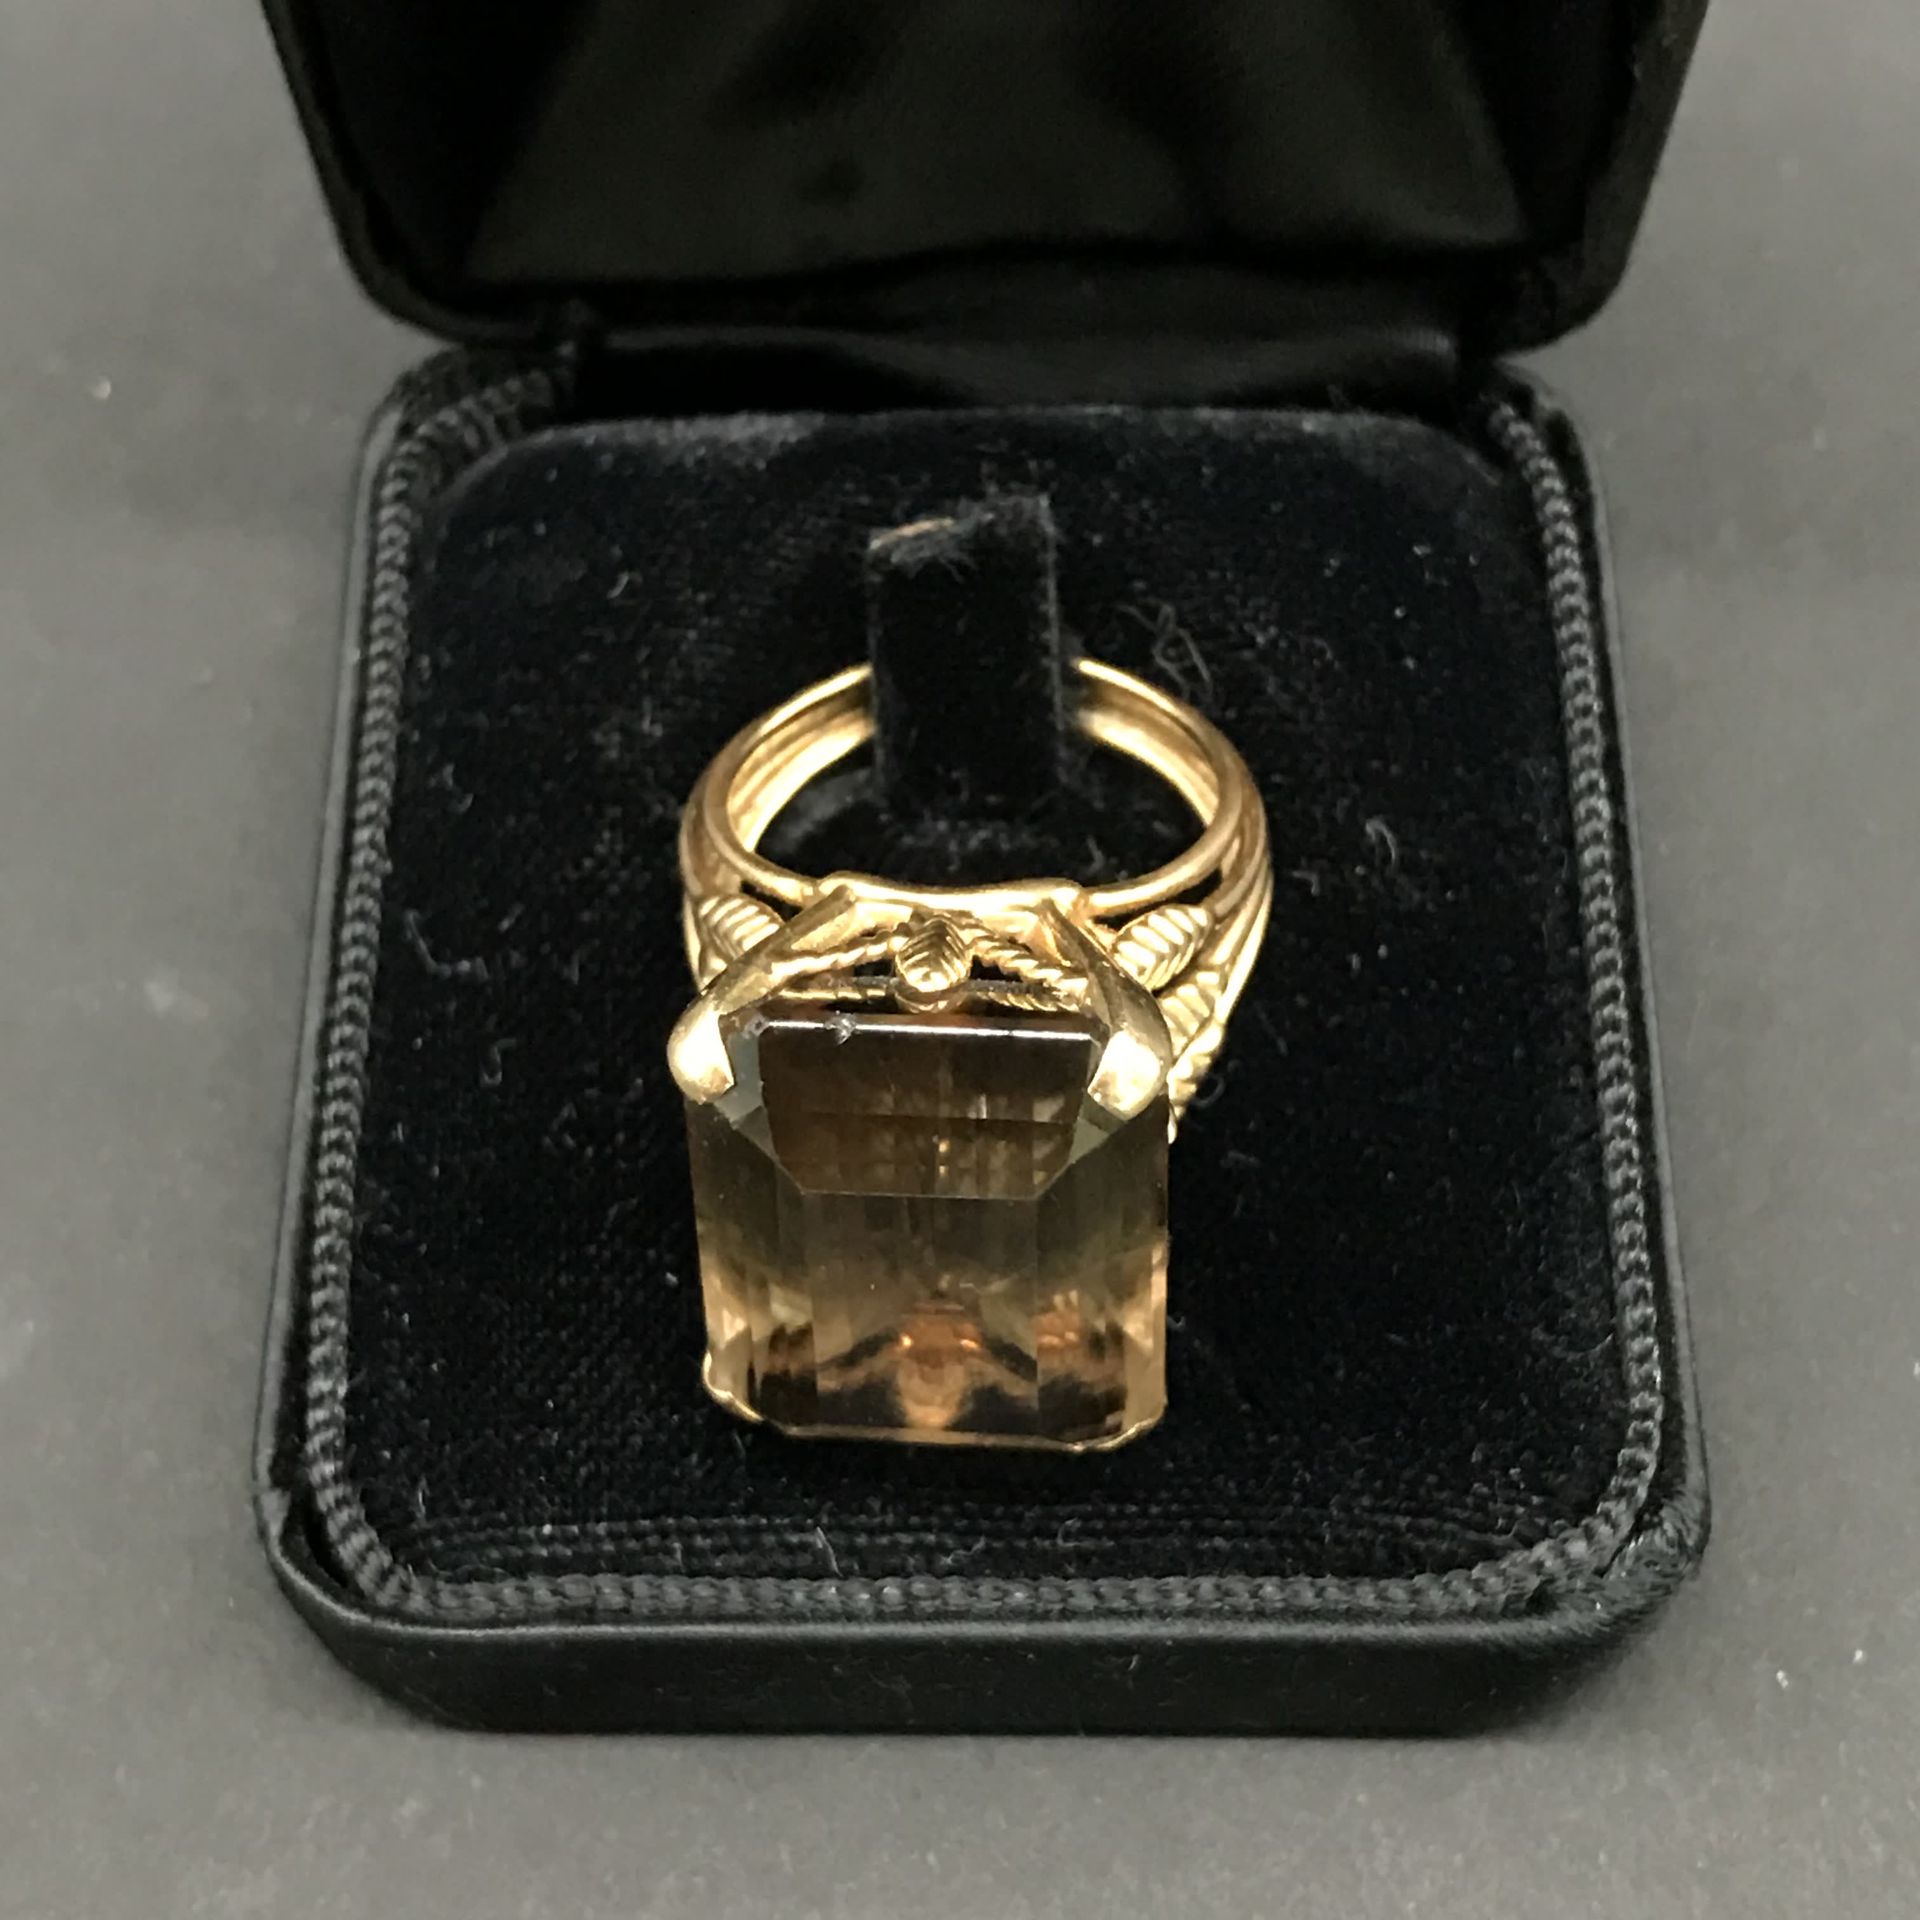 Null 戒指

黄金戒指上镶嵌着祖母绿切割的焦黄宝石和精美的叶子图案。

PB : 12,54g

TDD 53